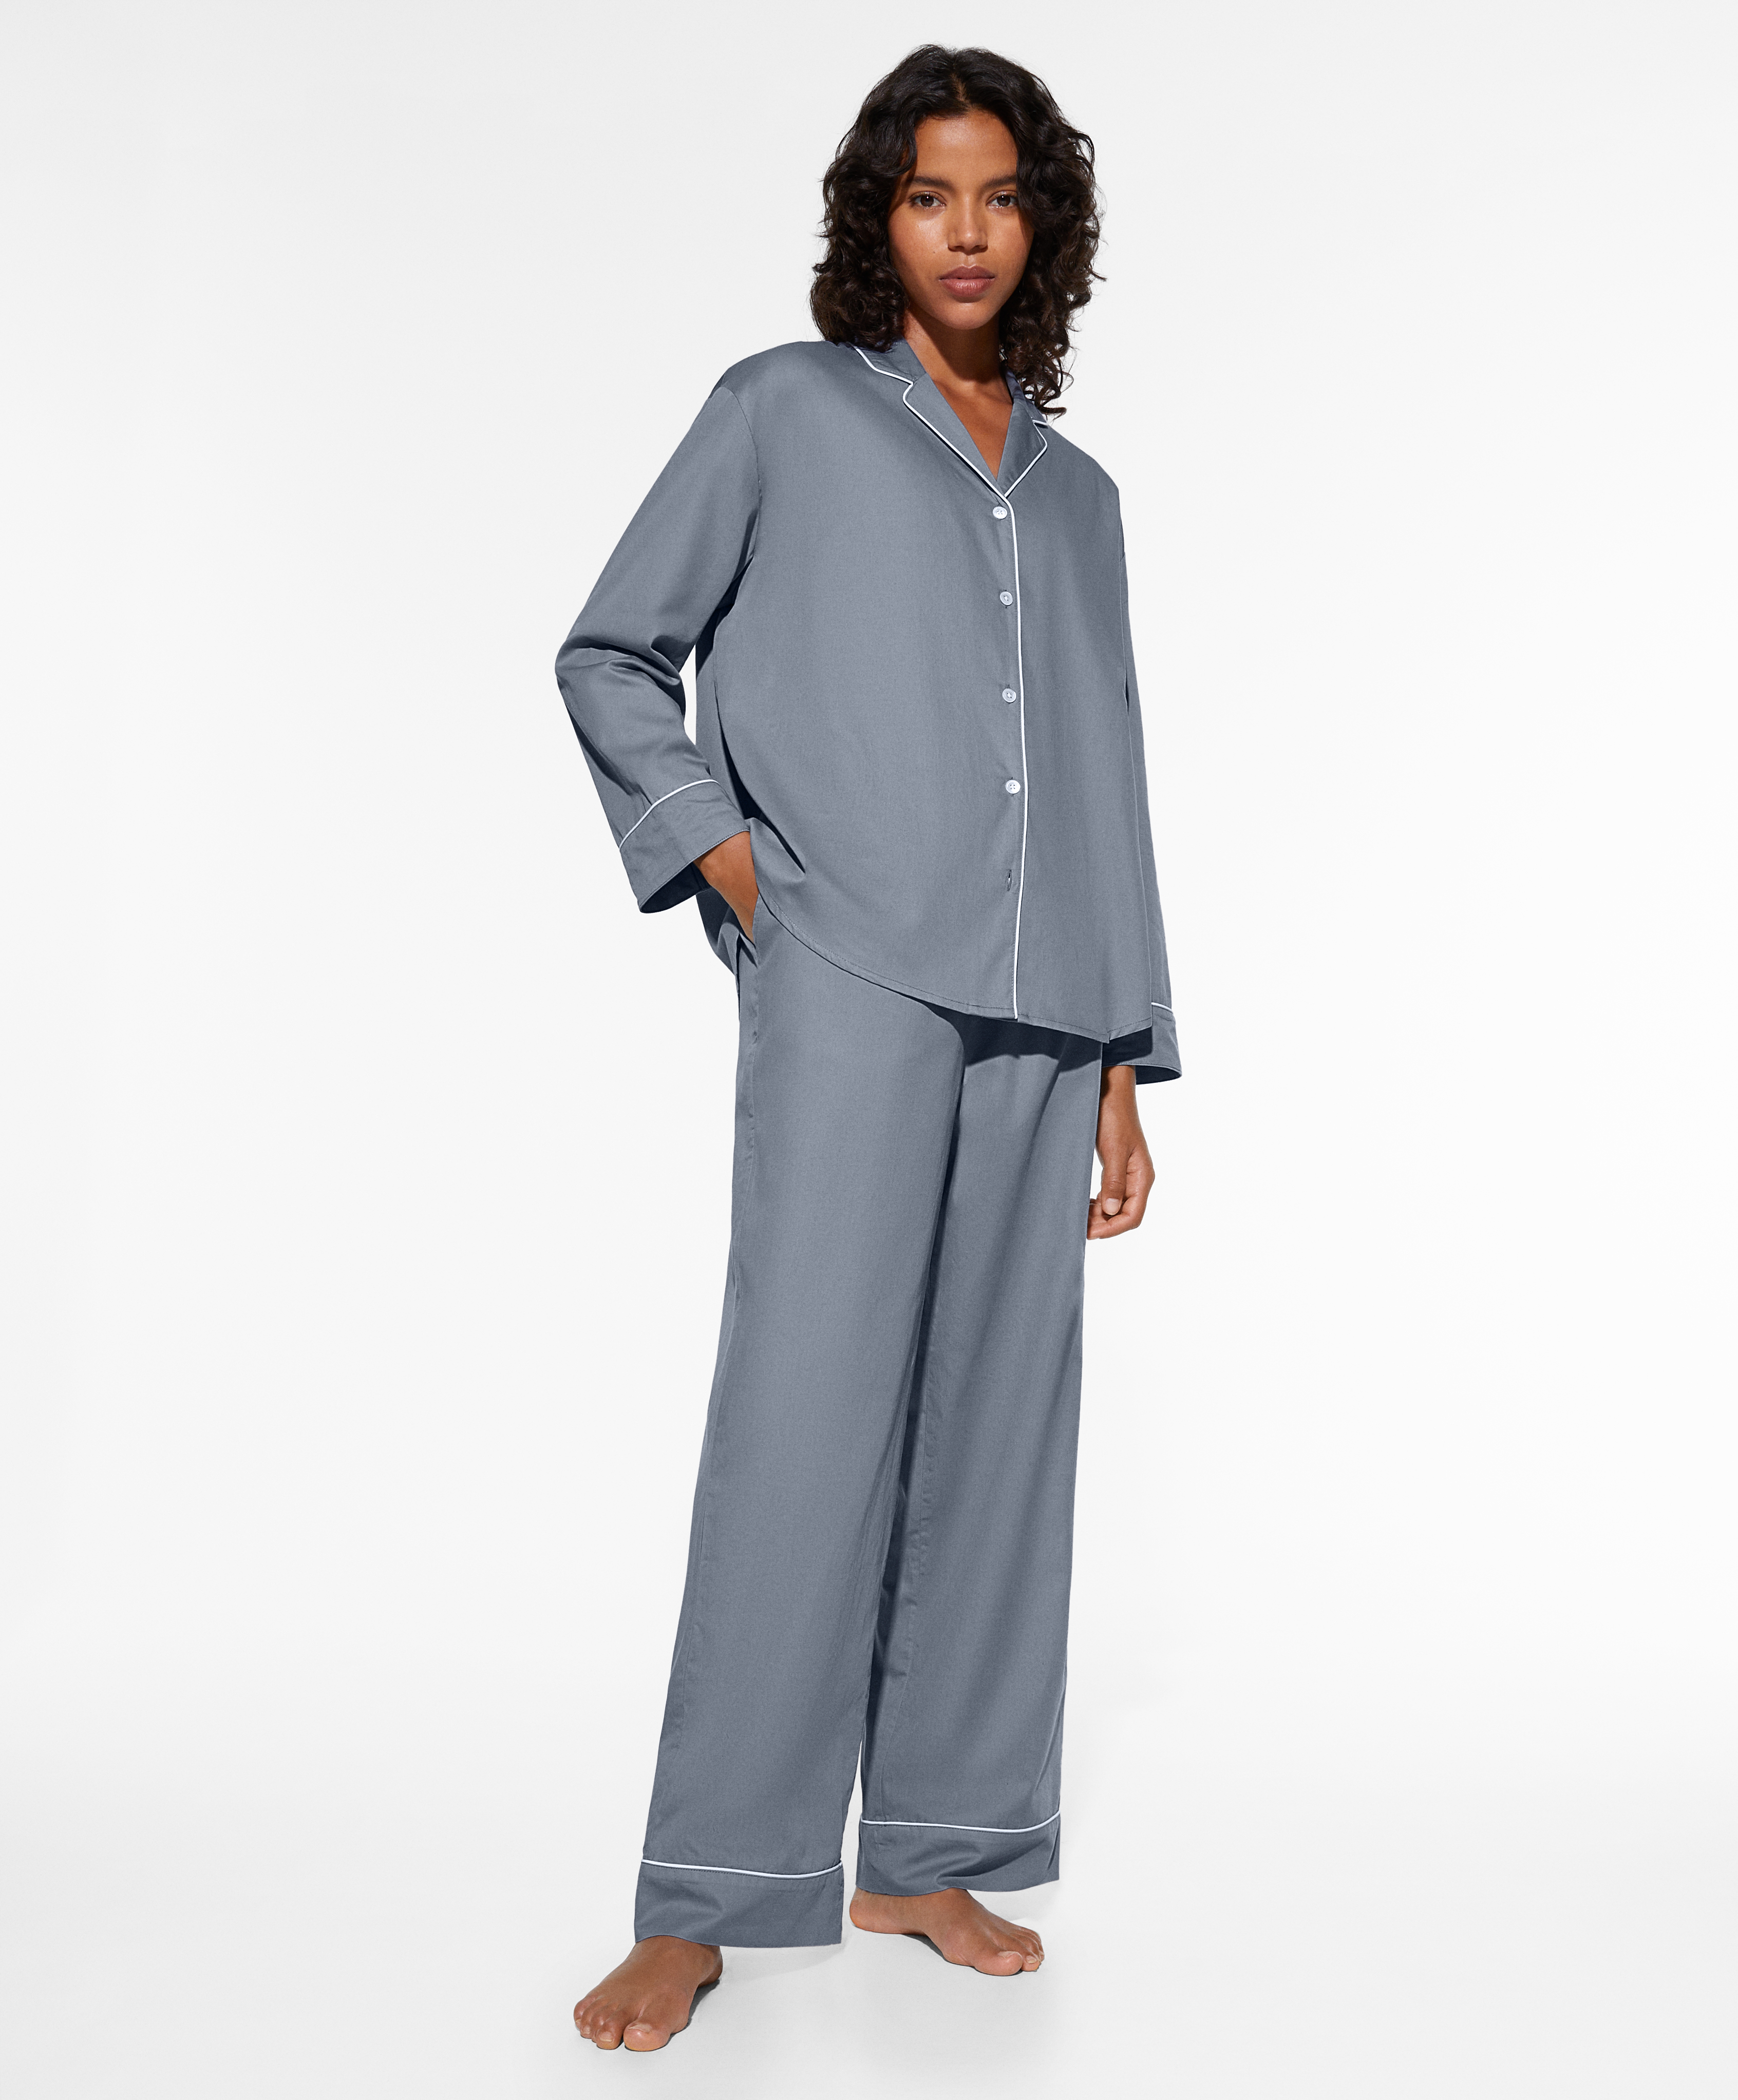 Blauwe lange pyjamaset van 100% katoen